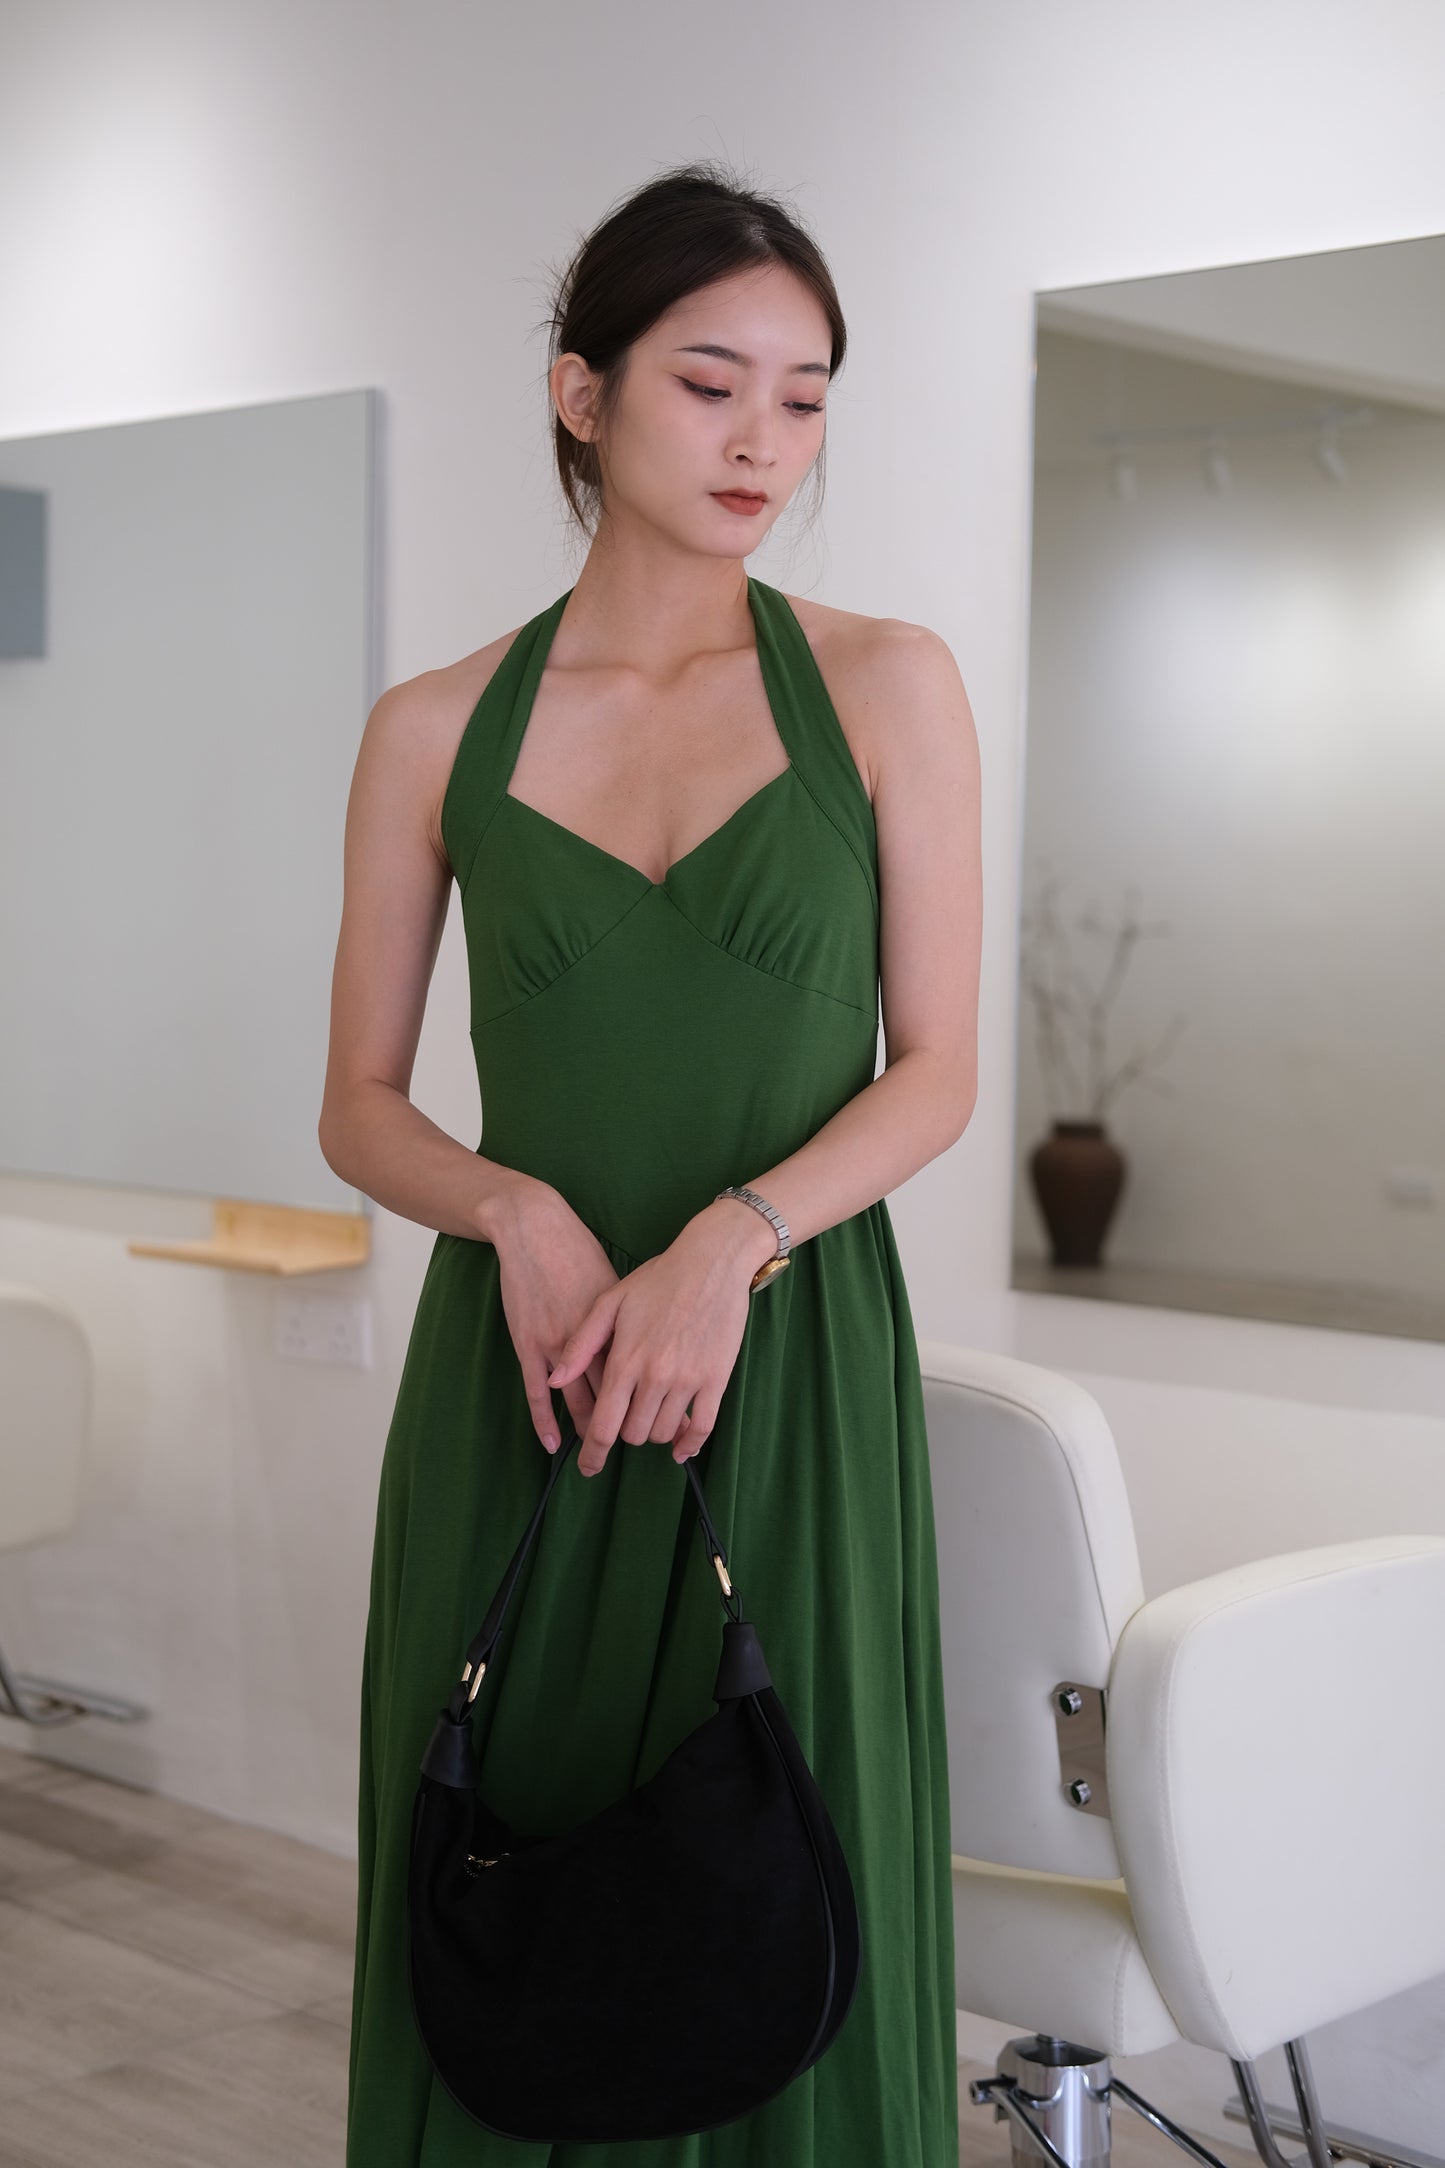 Hällerneck dress in green